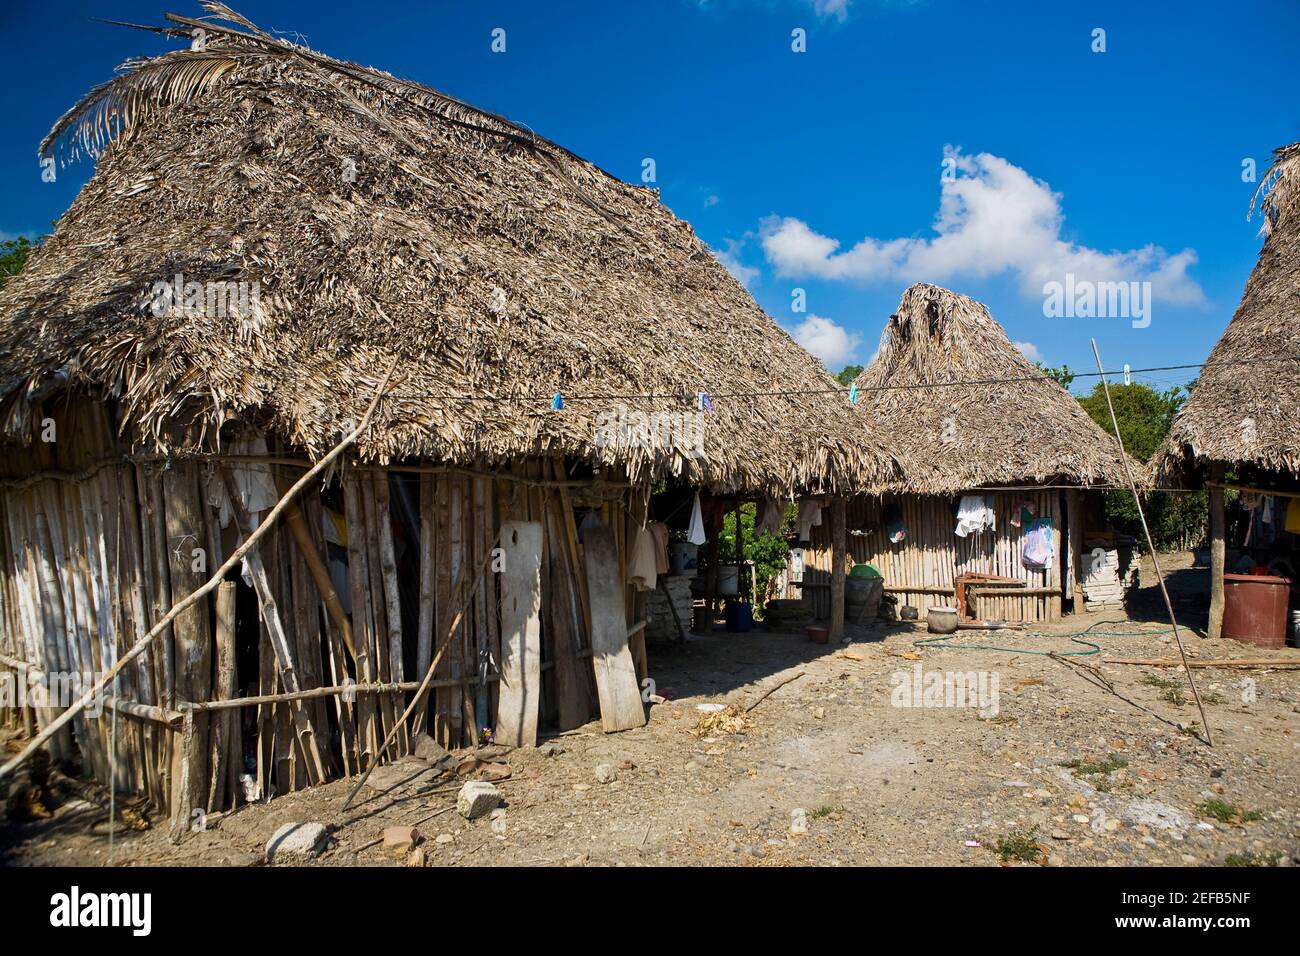 Houses in a village, Hidalgo, Papantla, Veracruz, Mexico Stock Photo